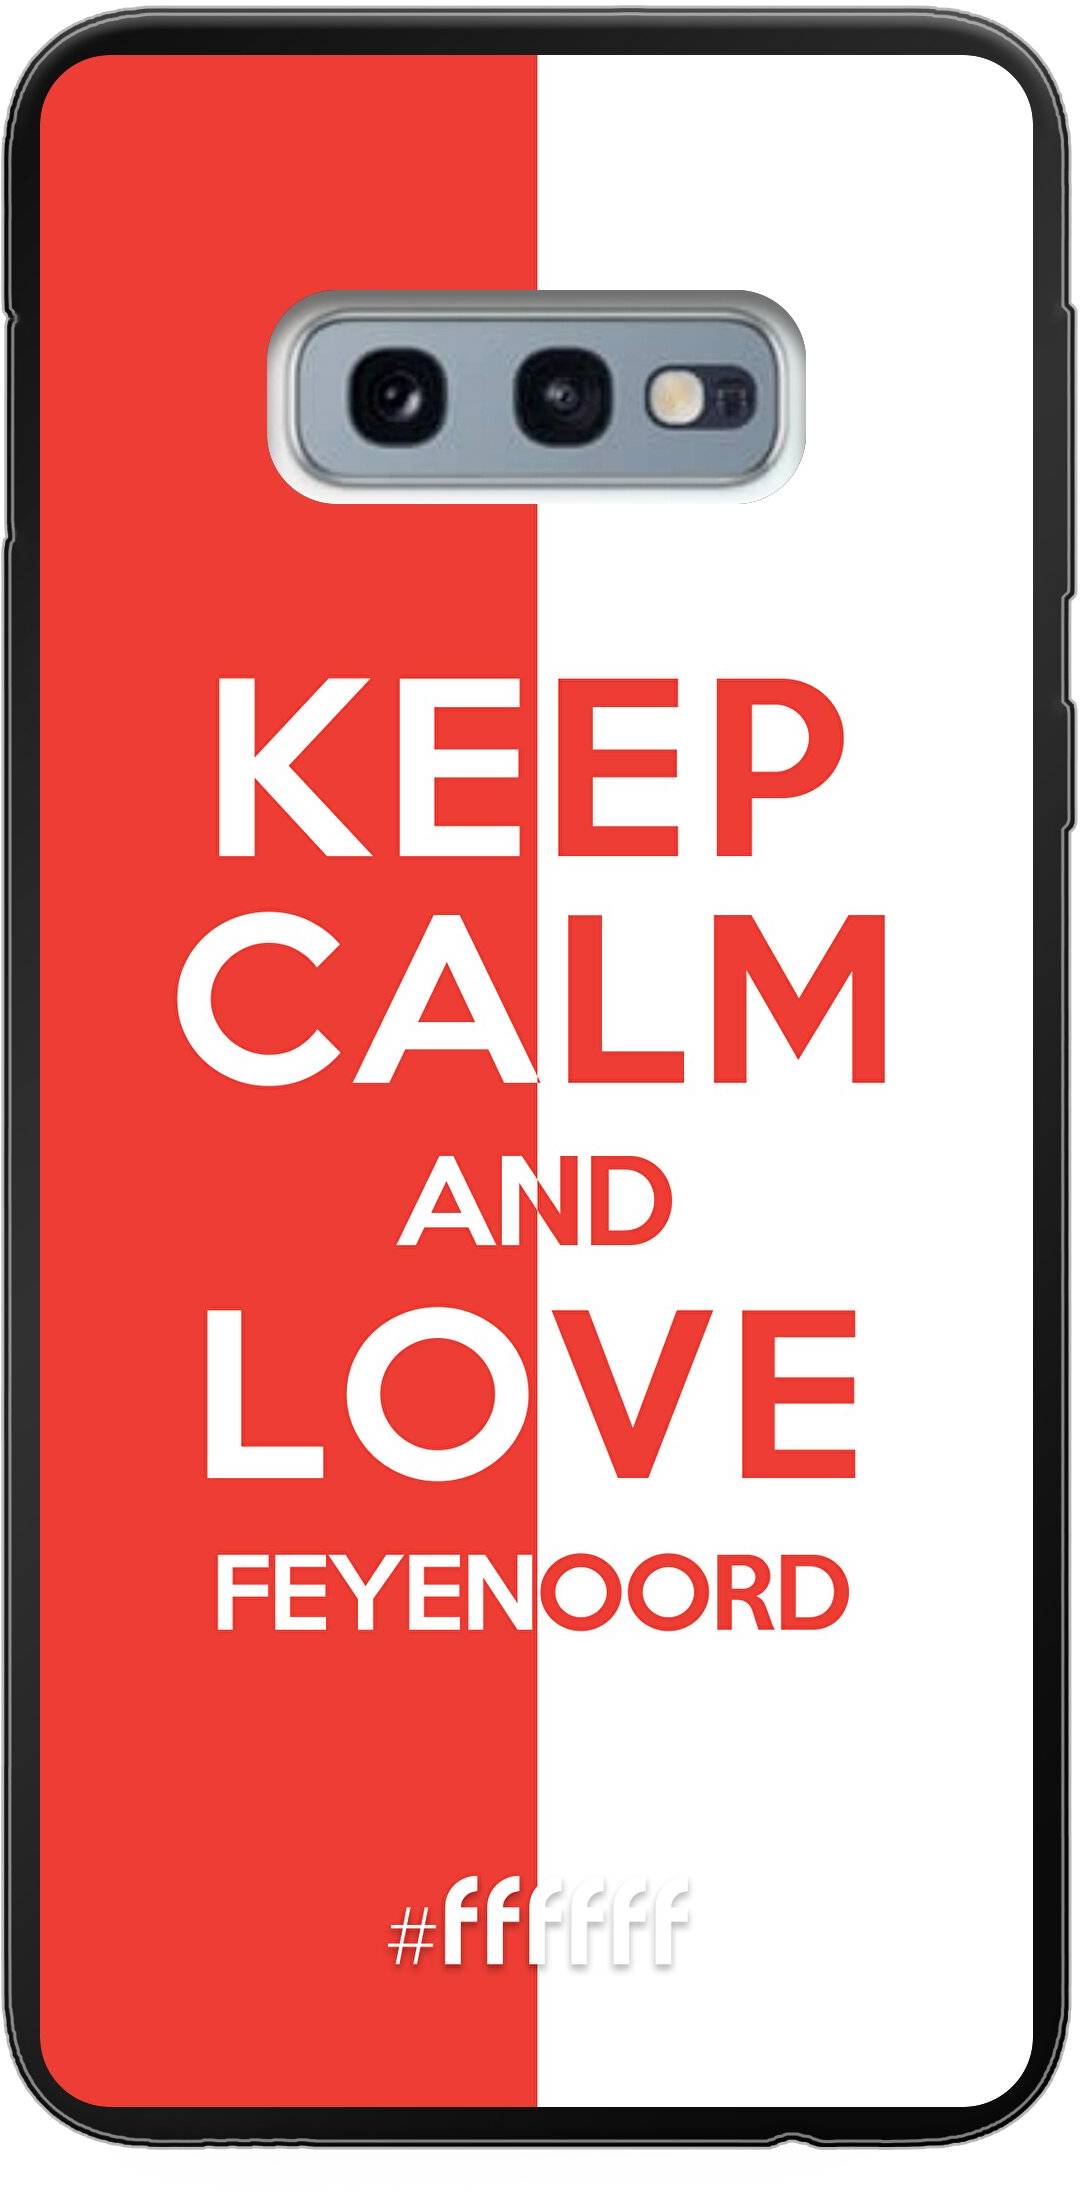 Feyenoord - Keep calm Galaxy S10e